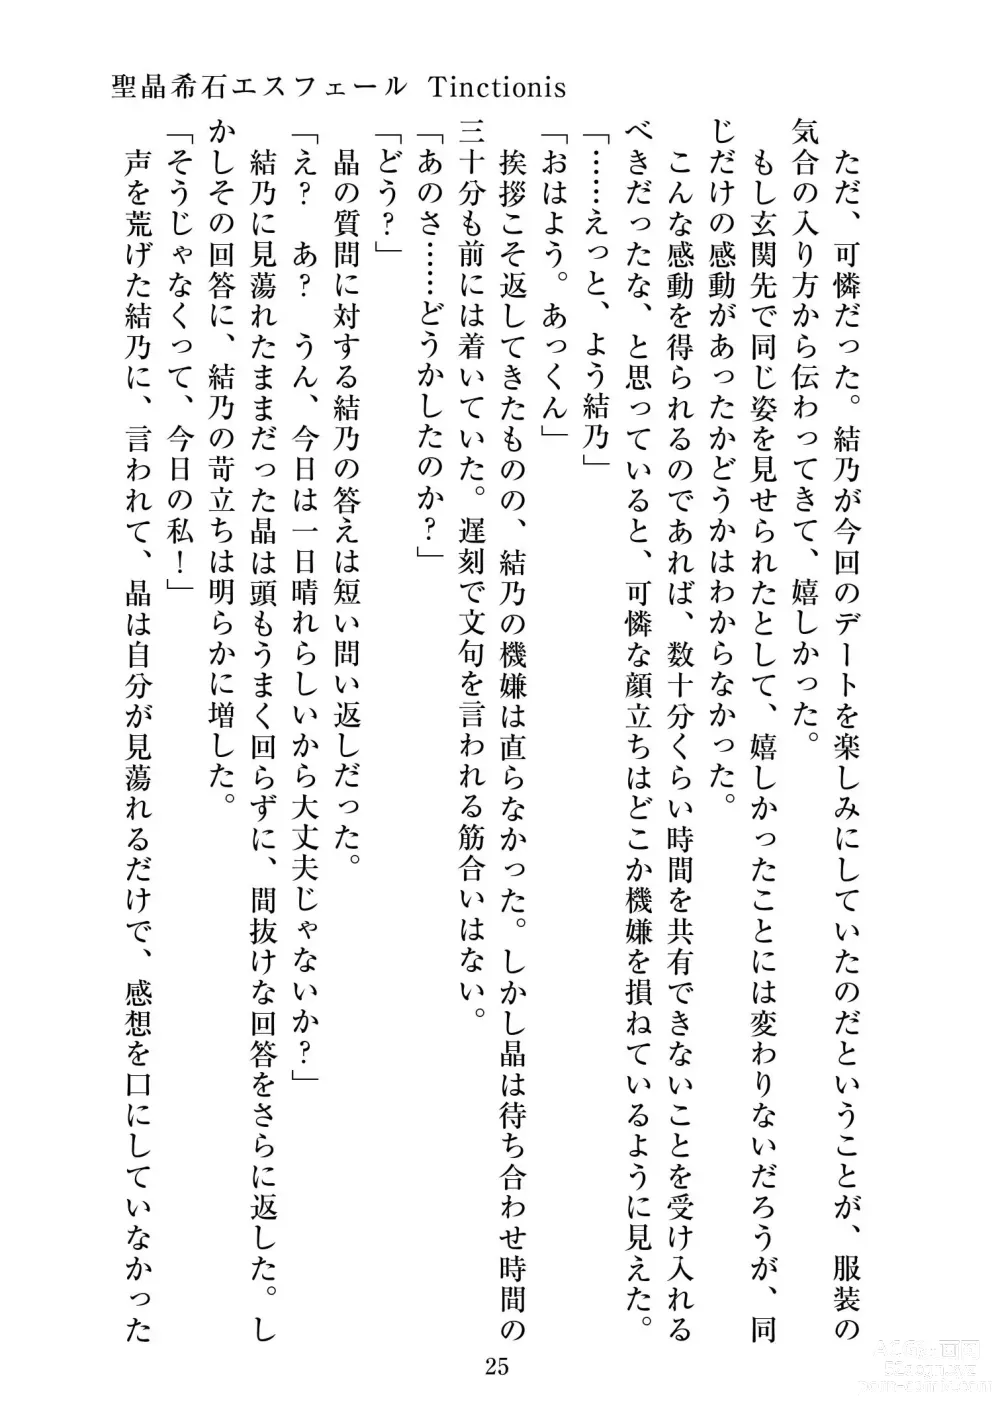 Page 26 of doujinshi Holy Crystal Esphére Tinctionis